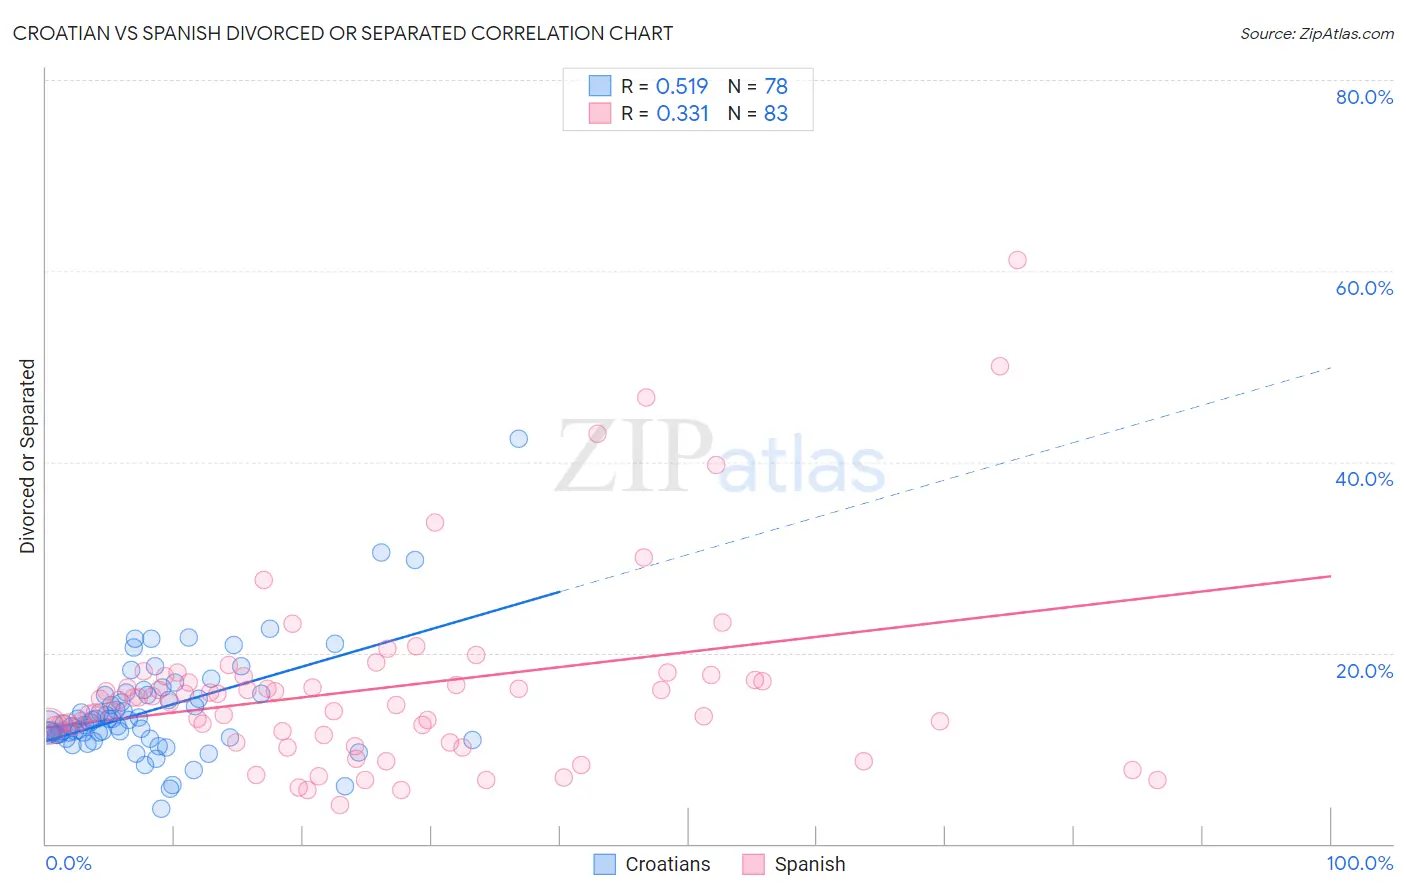 Croatian vs Spanish Divorced or Separated